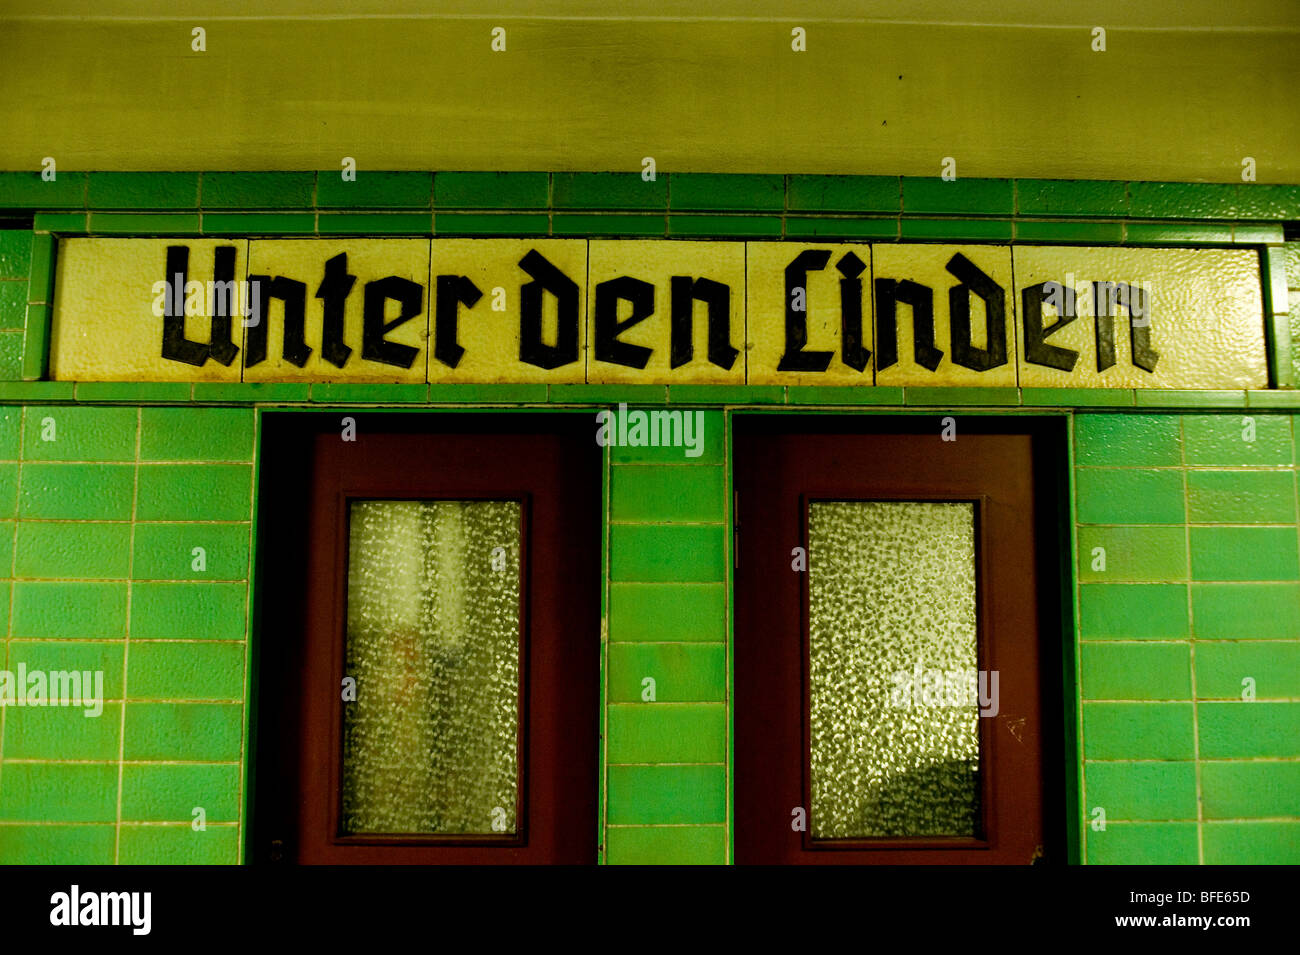 Berlin 2009,U Bahn,Unter den Linden,Gothic script, 1989 DDR Germany Unified positive forward history War Cold War end East West Stock Photo